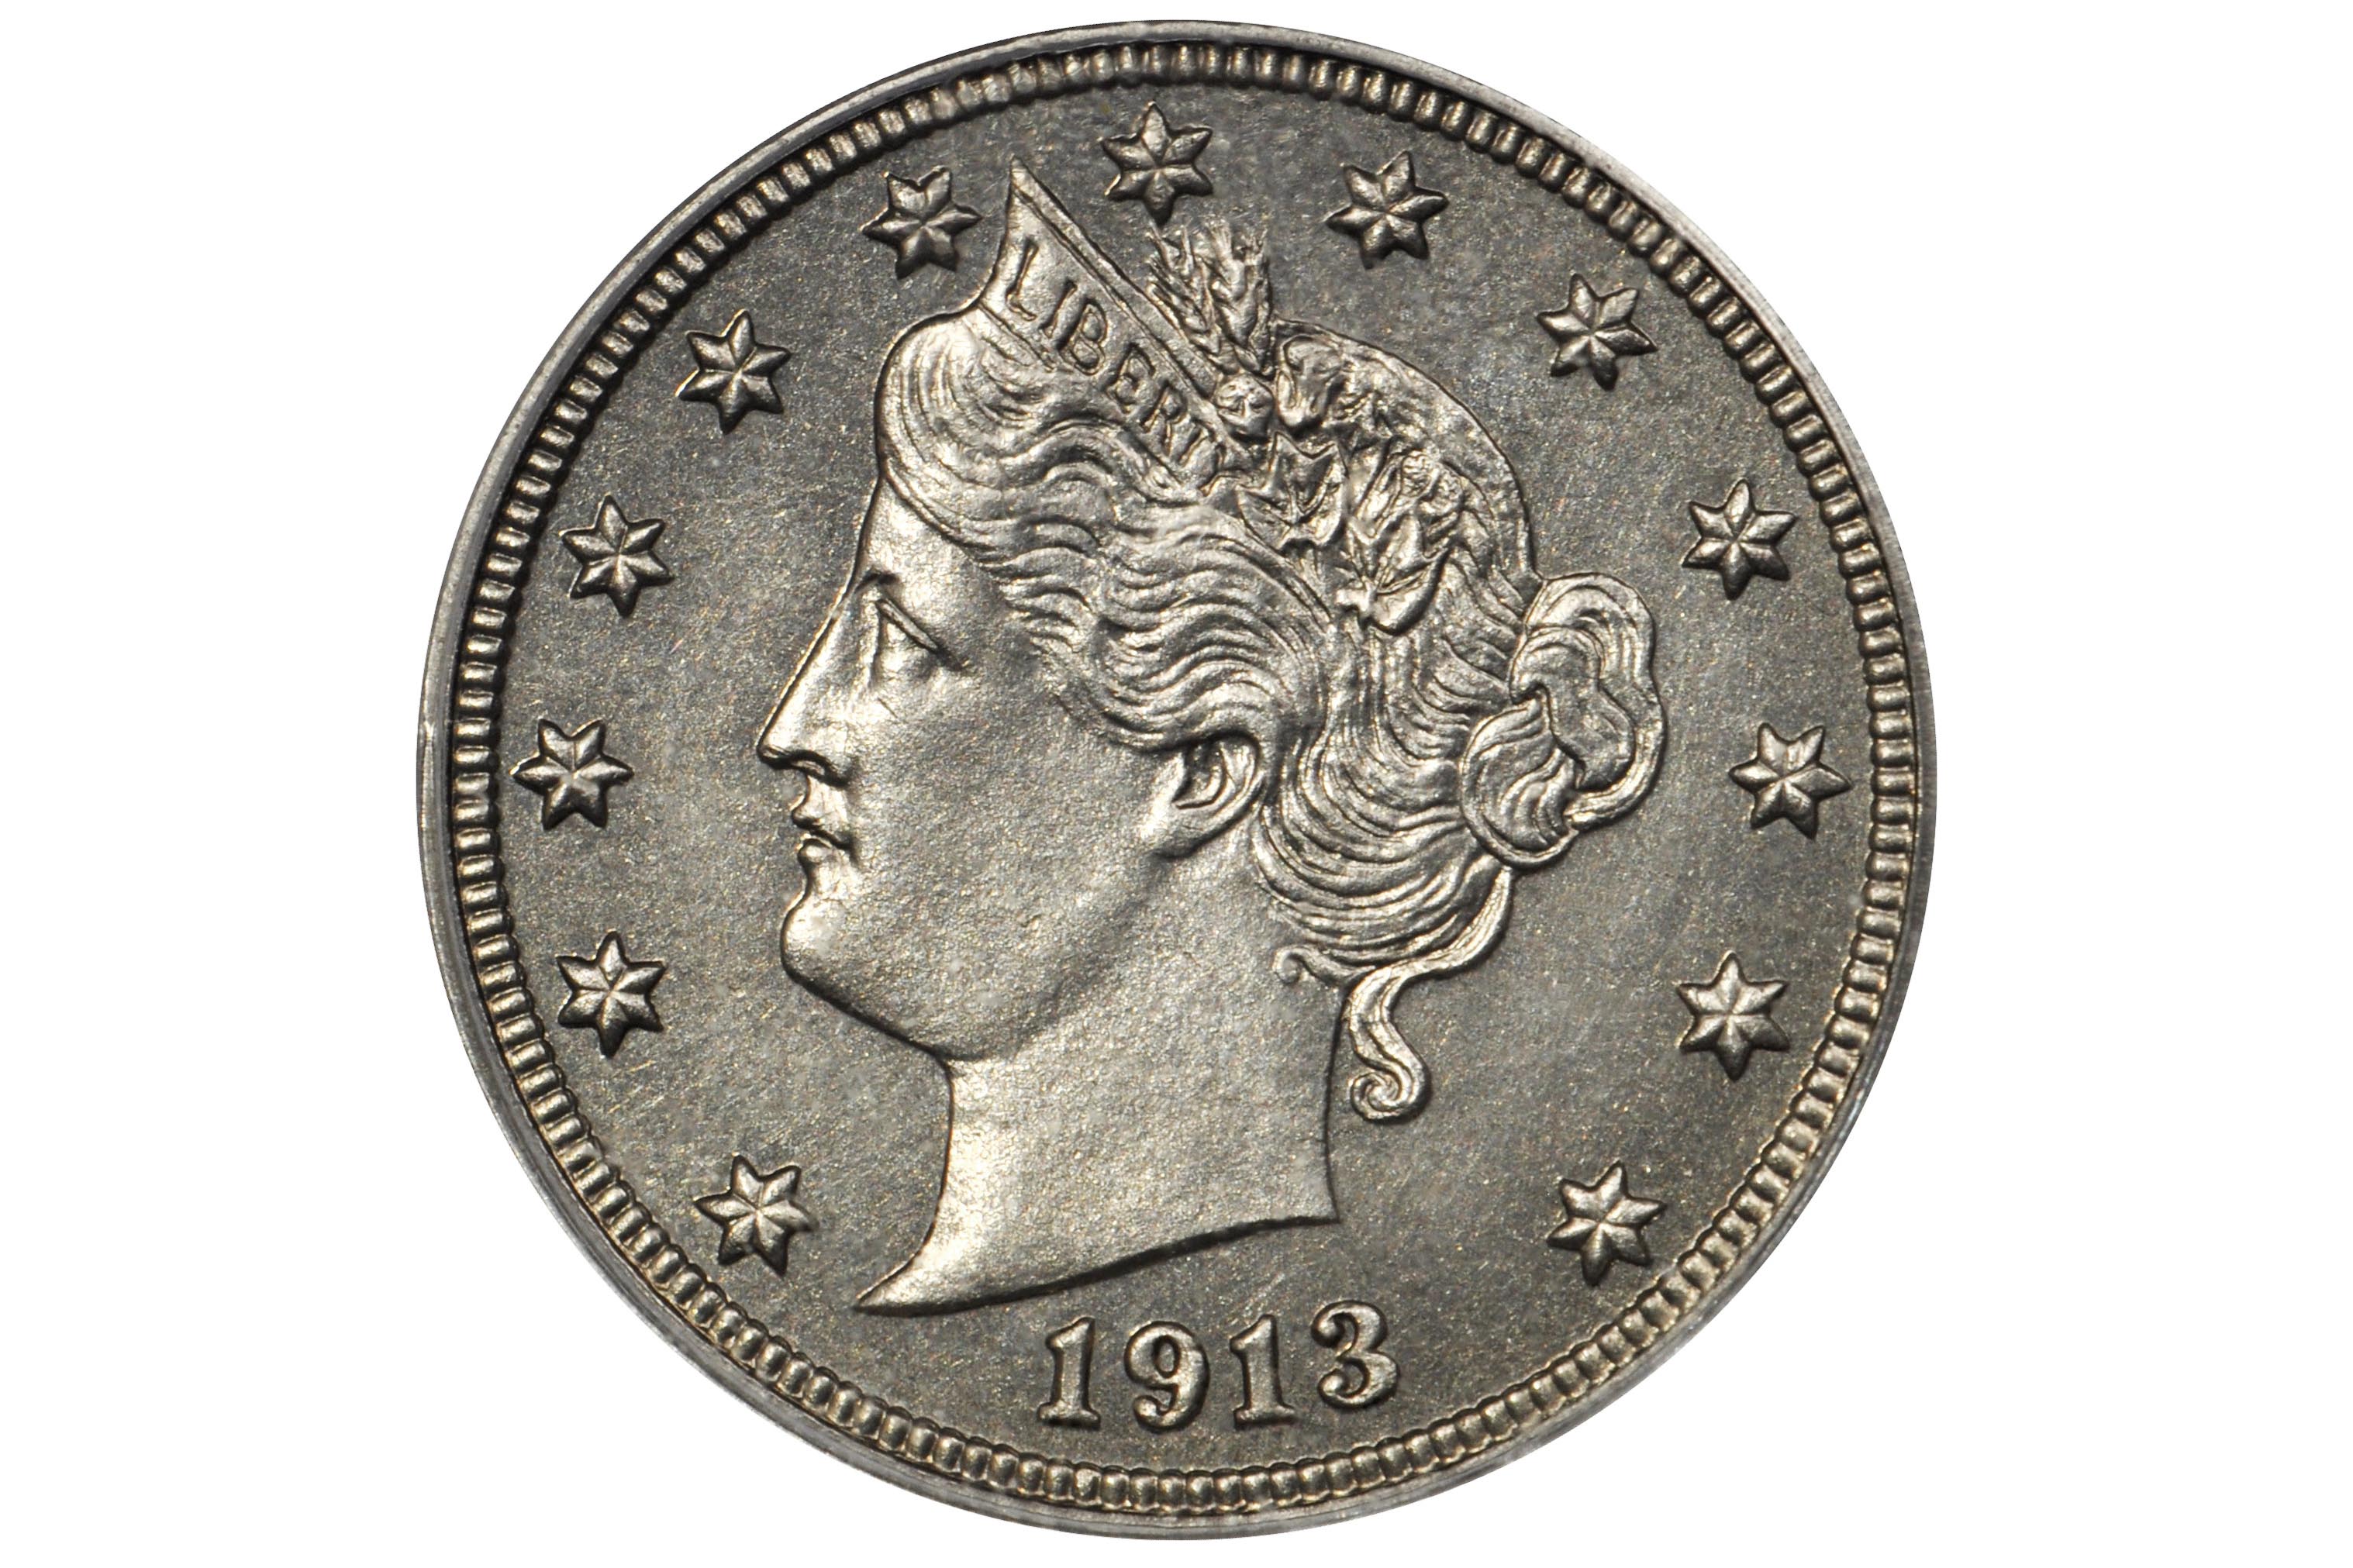 One Dollar Coins Worth Money - New Dollar Wallpaper HD Noeimage.Org3035 x 2023